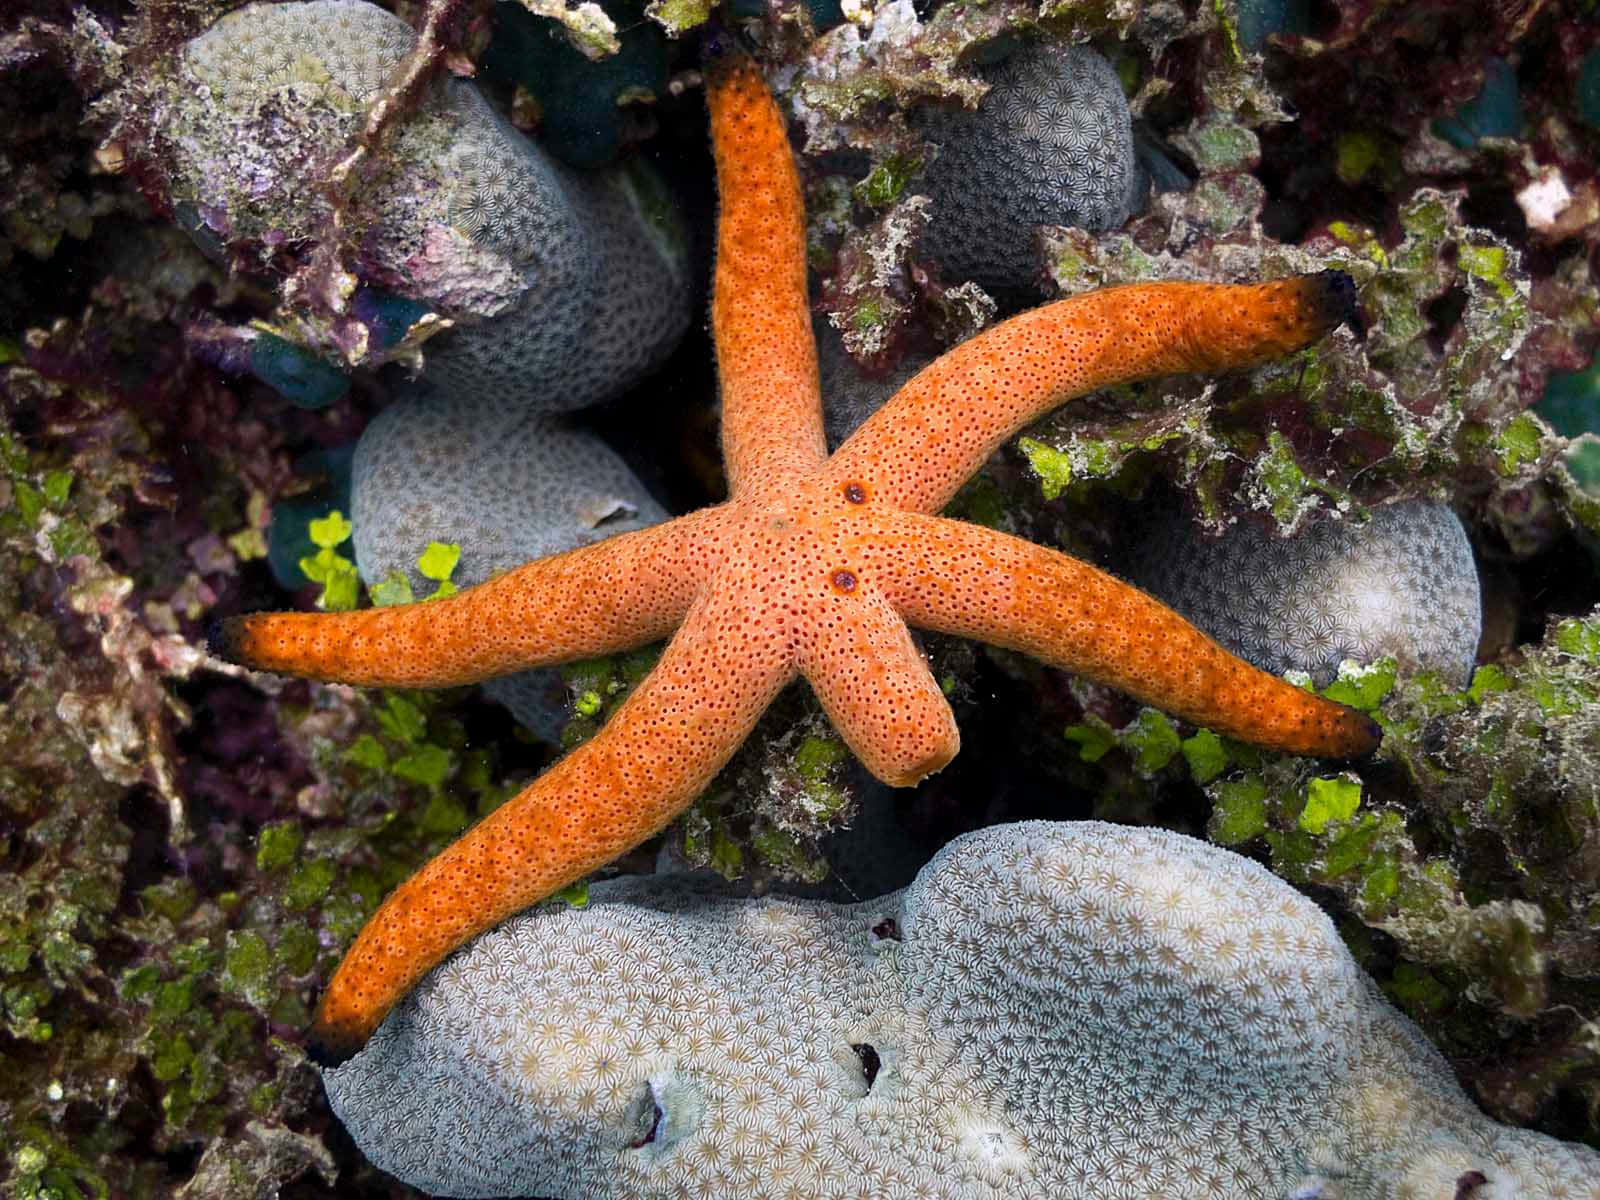 A vibrant orange starfish on a white sandy beach